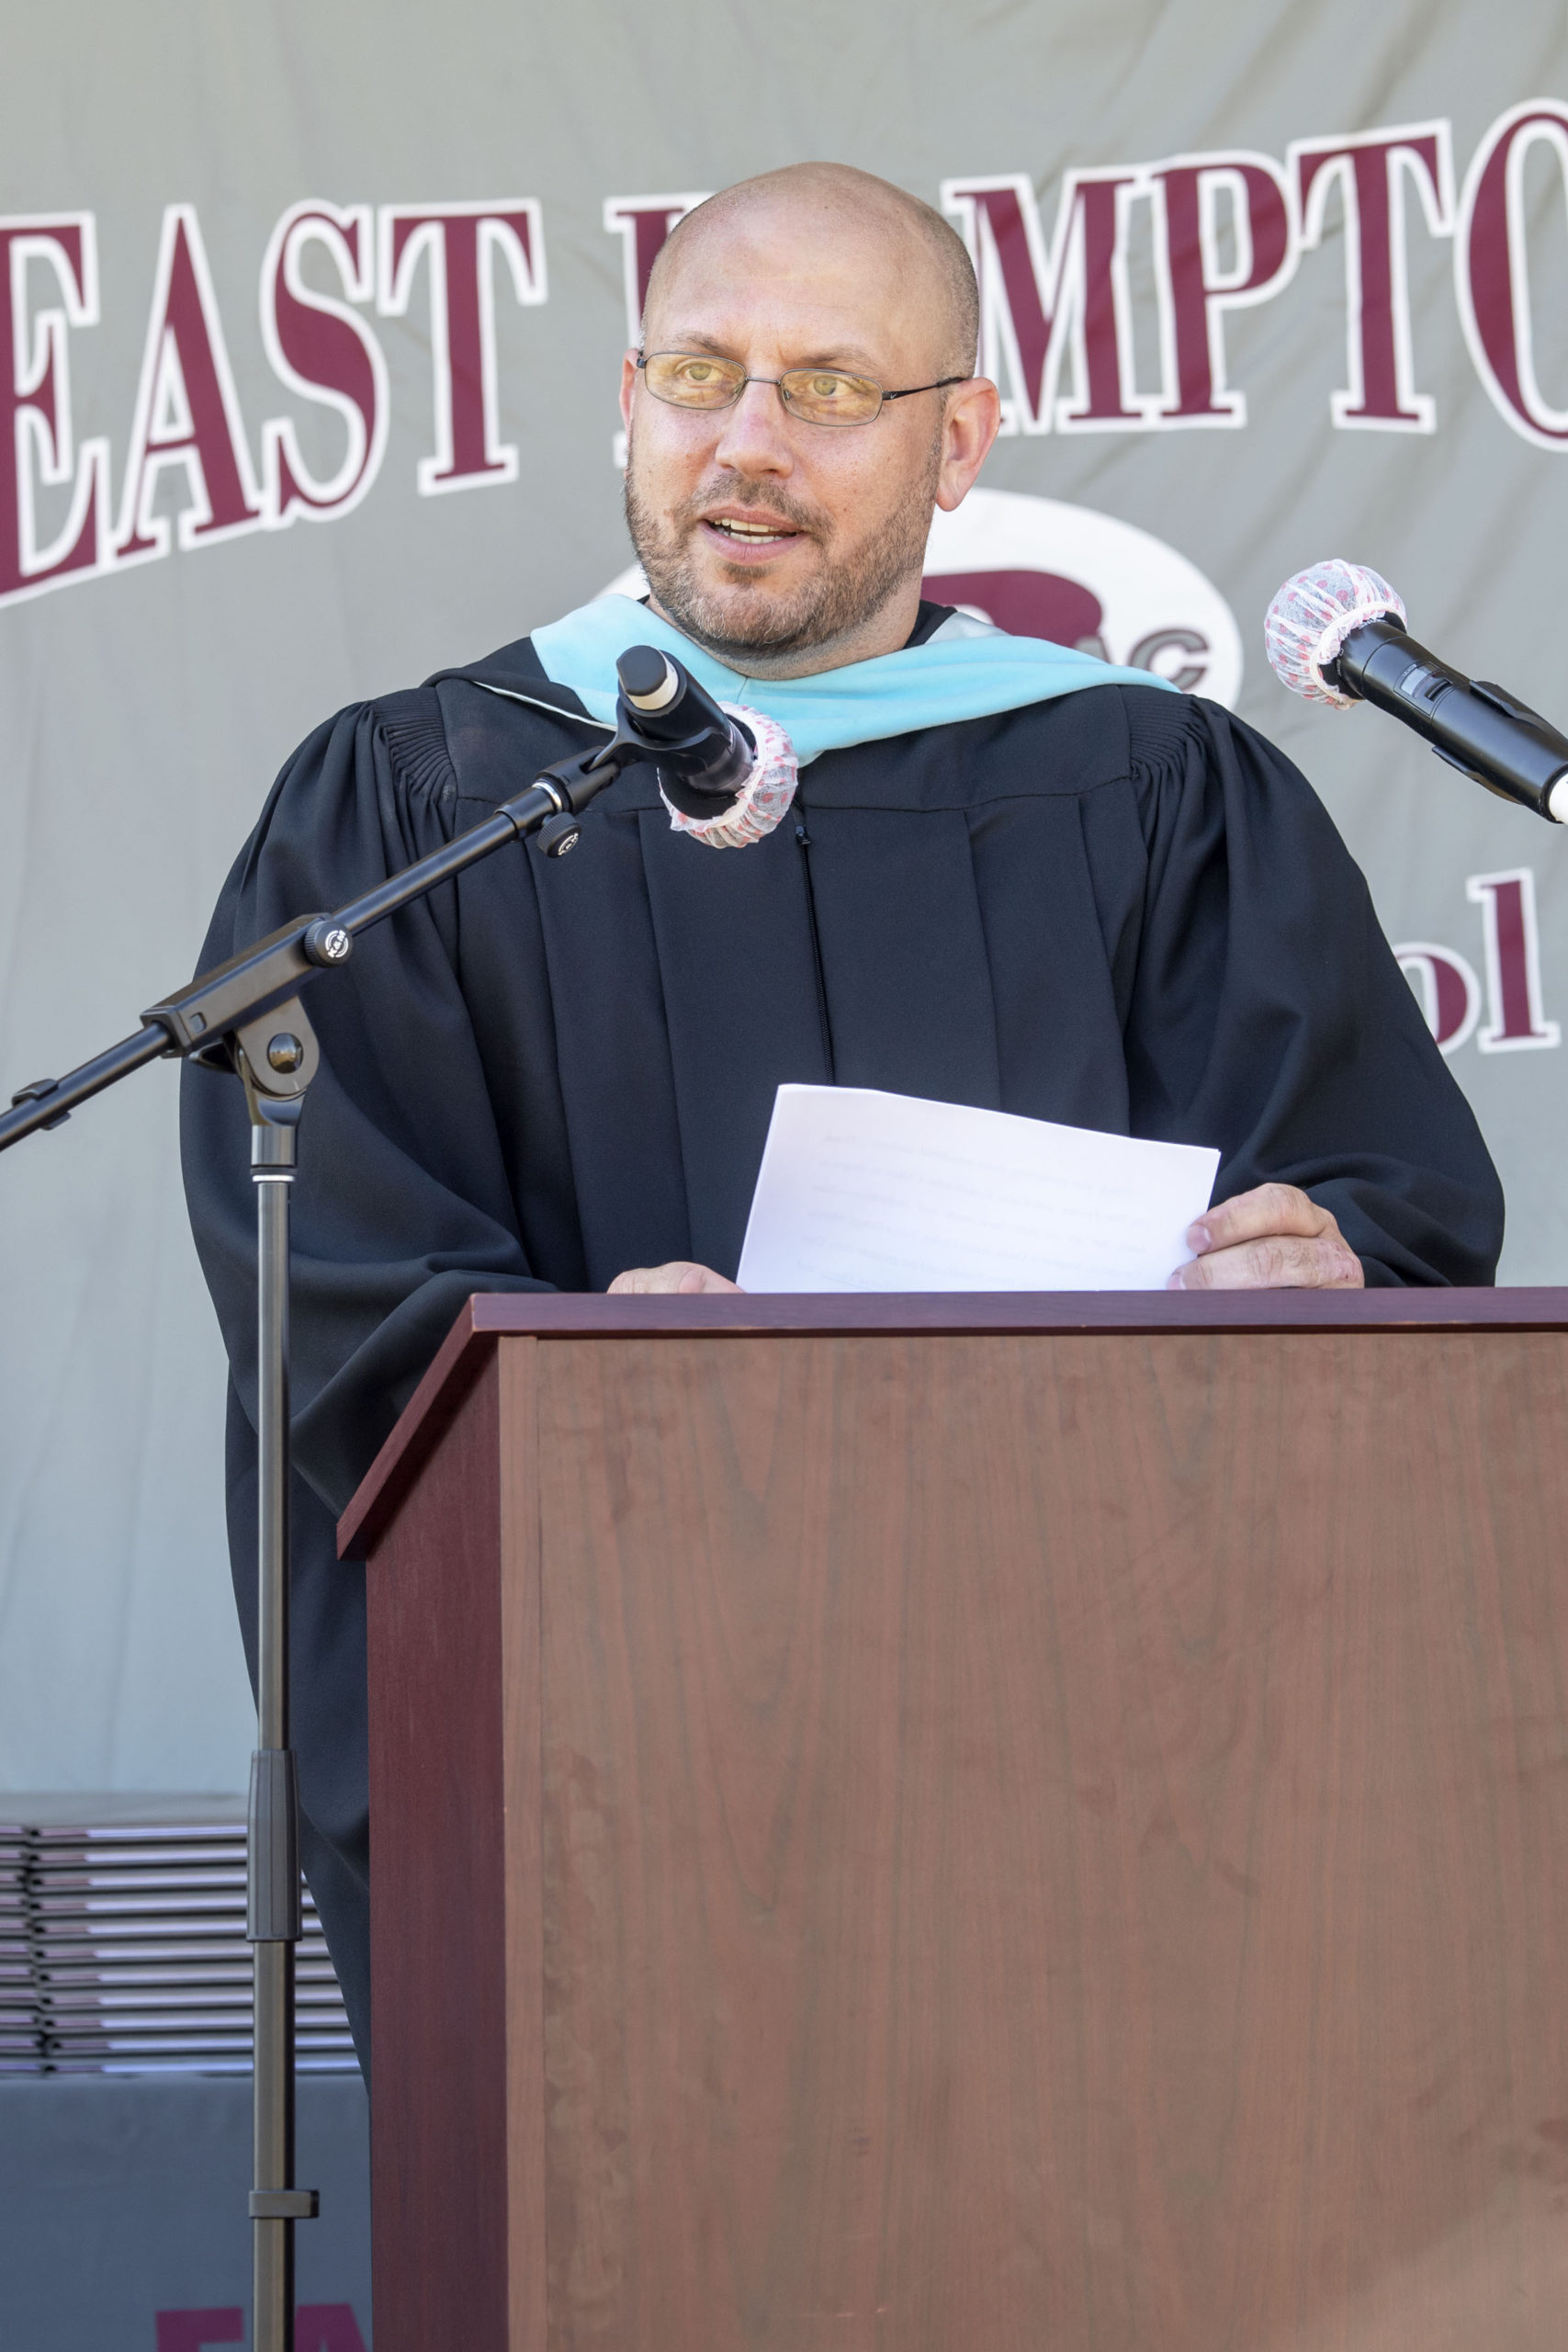 East Hampton High School Principal Adam Fine during the 2020 graduation ceremony at the East Hampton High School on Friday.